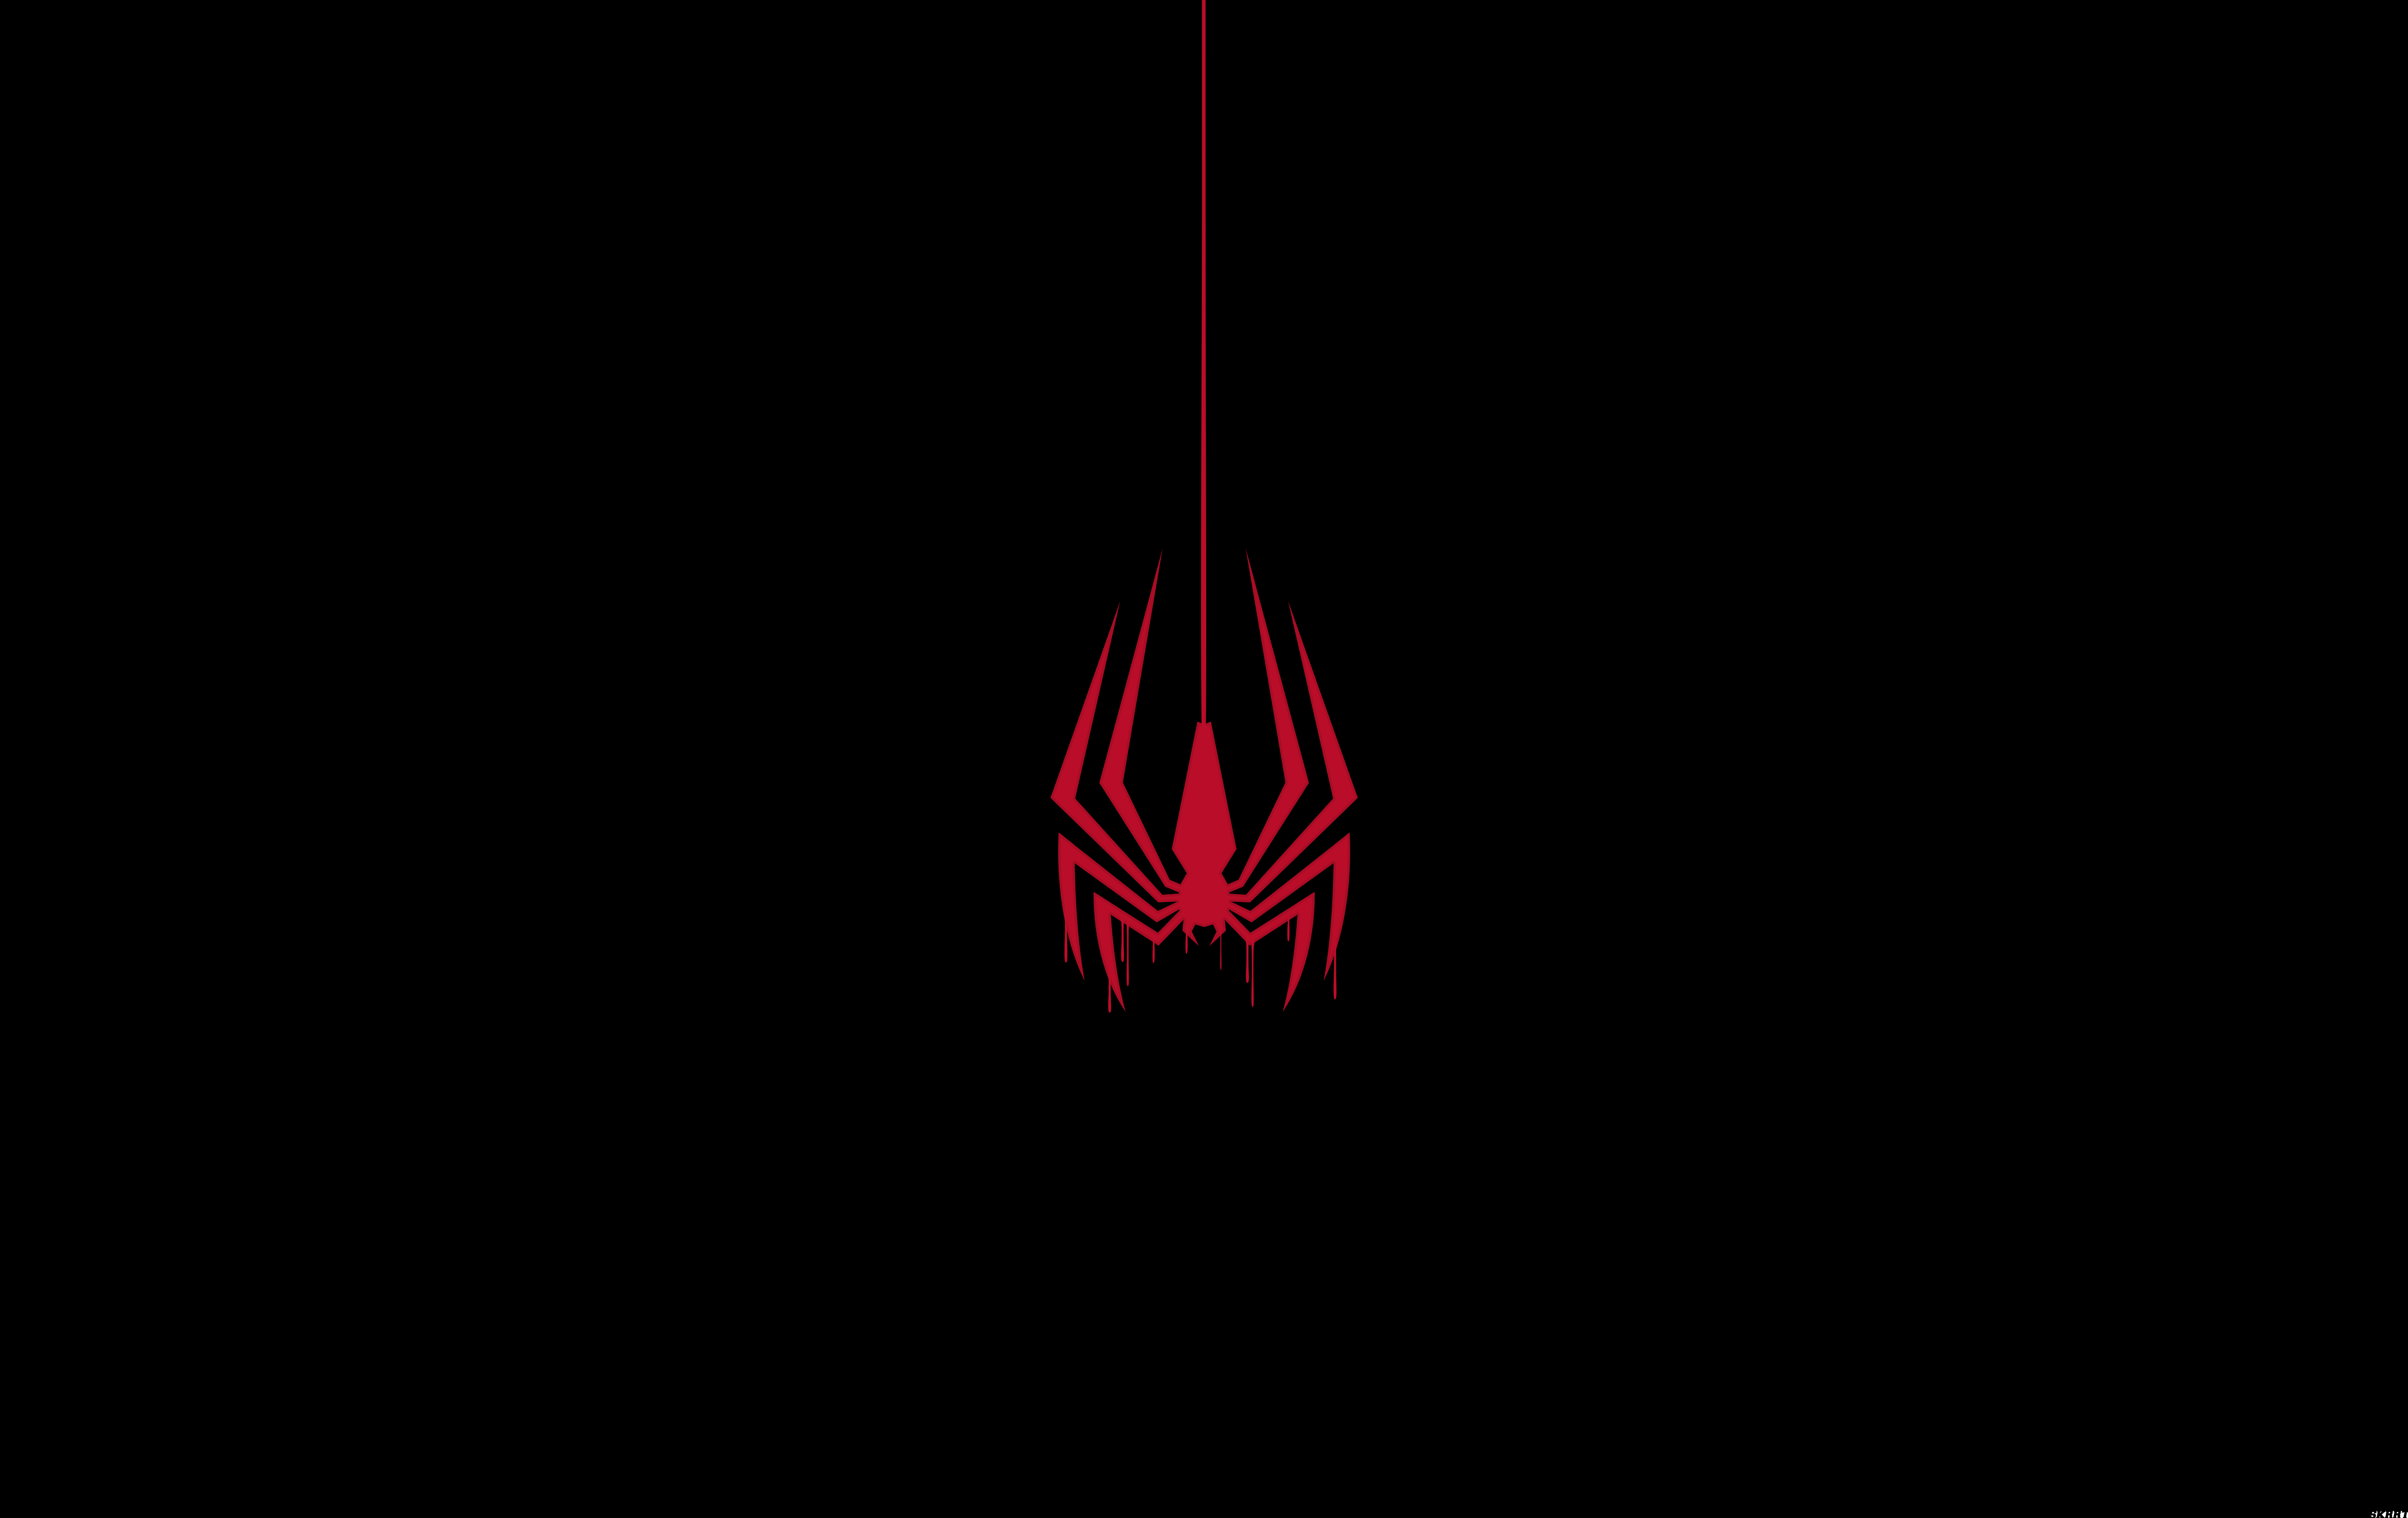 General 8179x5156 Spider-Man Spiderman 2 simple background black red dripping paint spider logo superhero Marvel Comics digital art